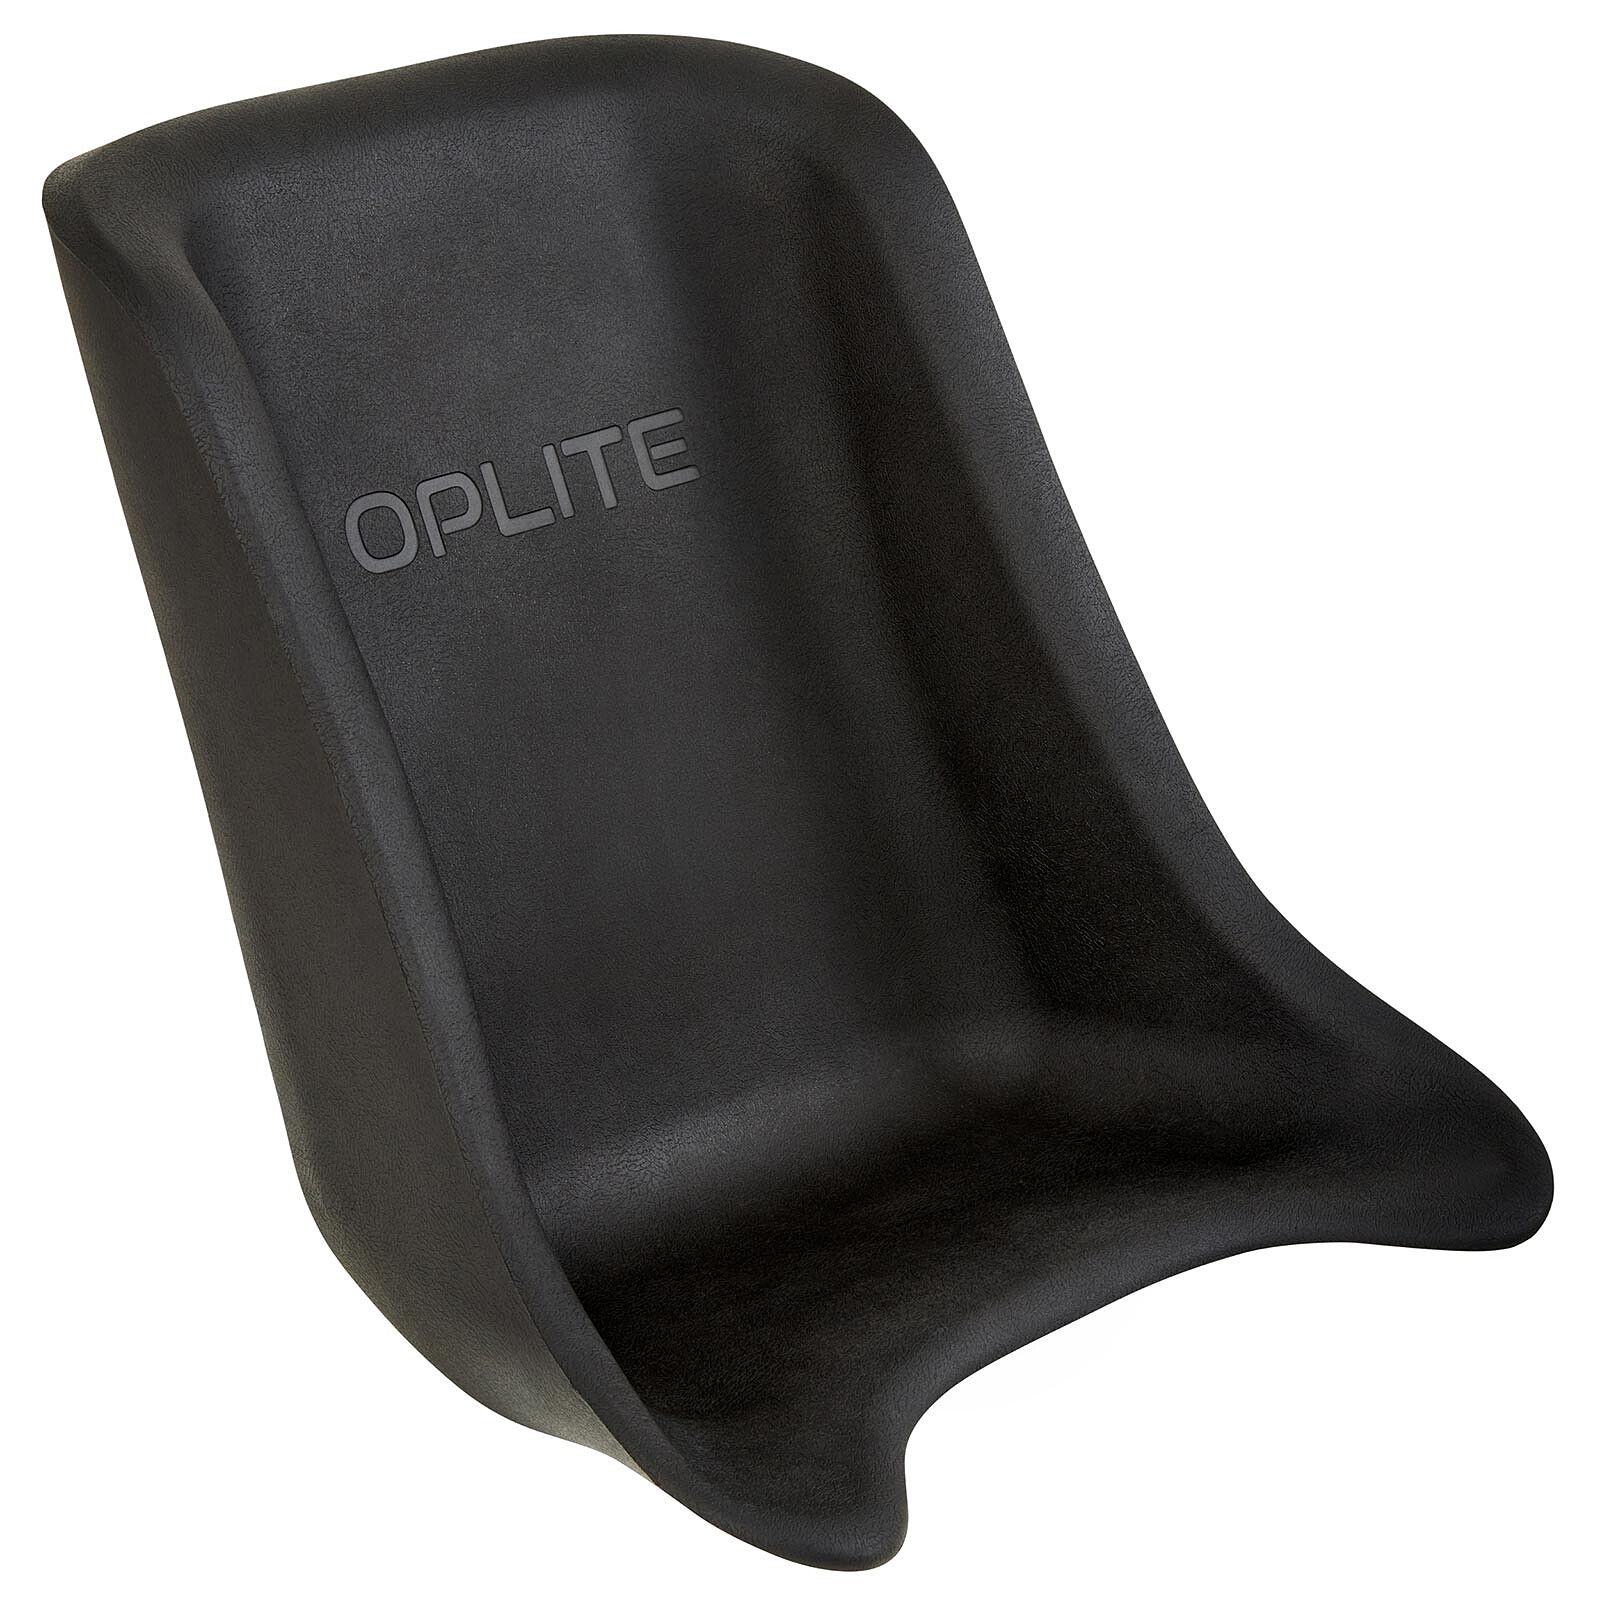 OPLITE NitroKart Universal Seat Reducer - Other gaming accessories